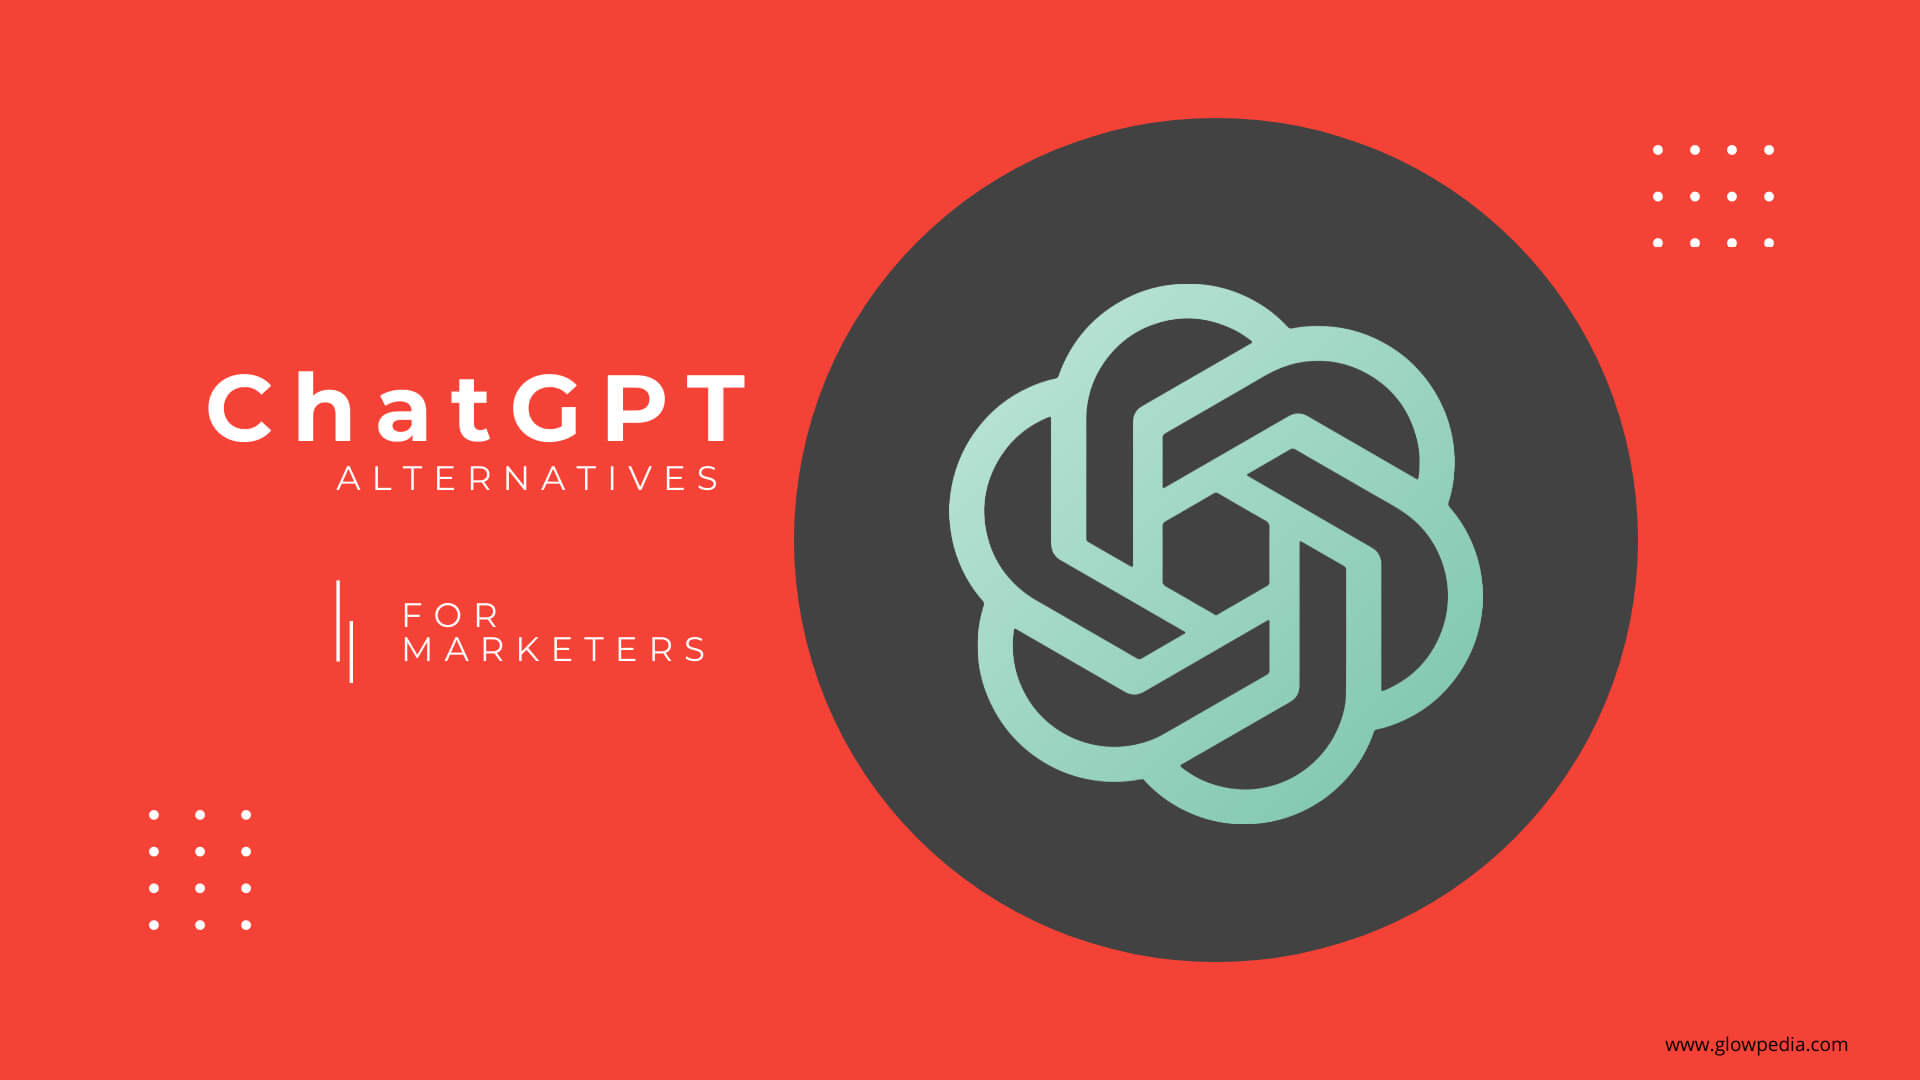 ChatGPT Alternatives for Marketers